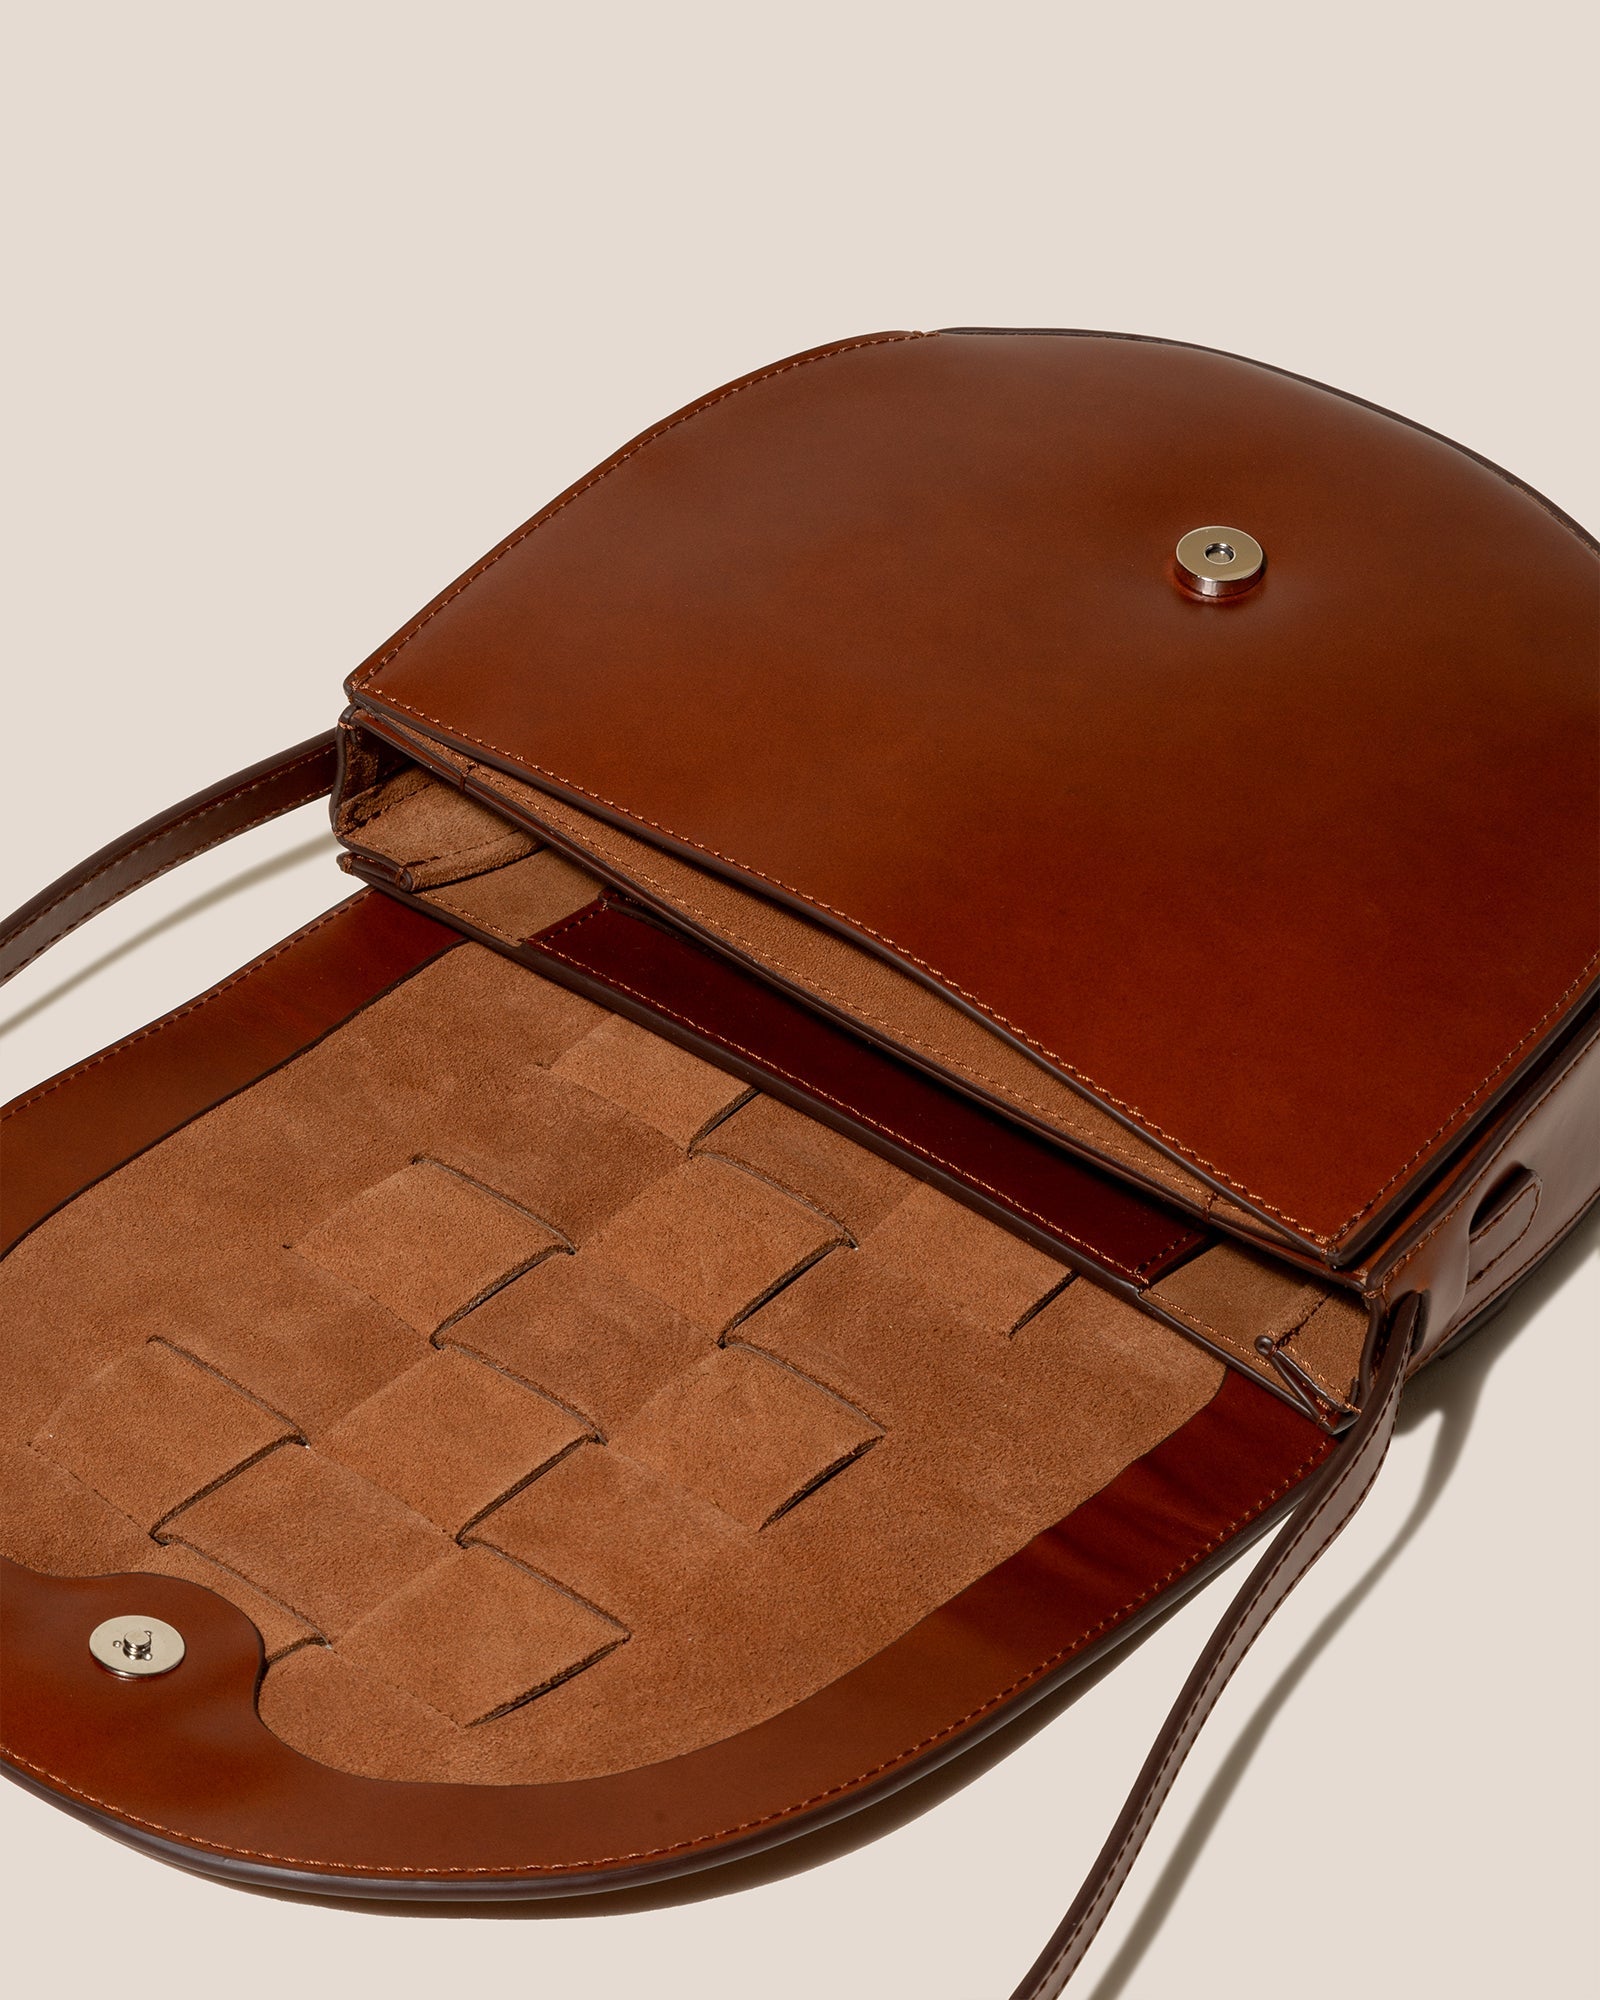 Sinia woven-panel leather cross-body bag | Hereu